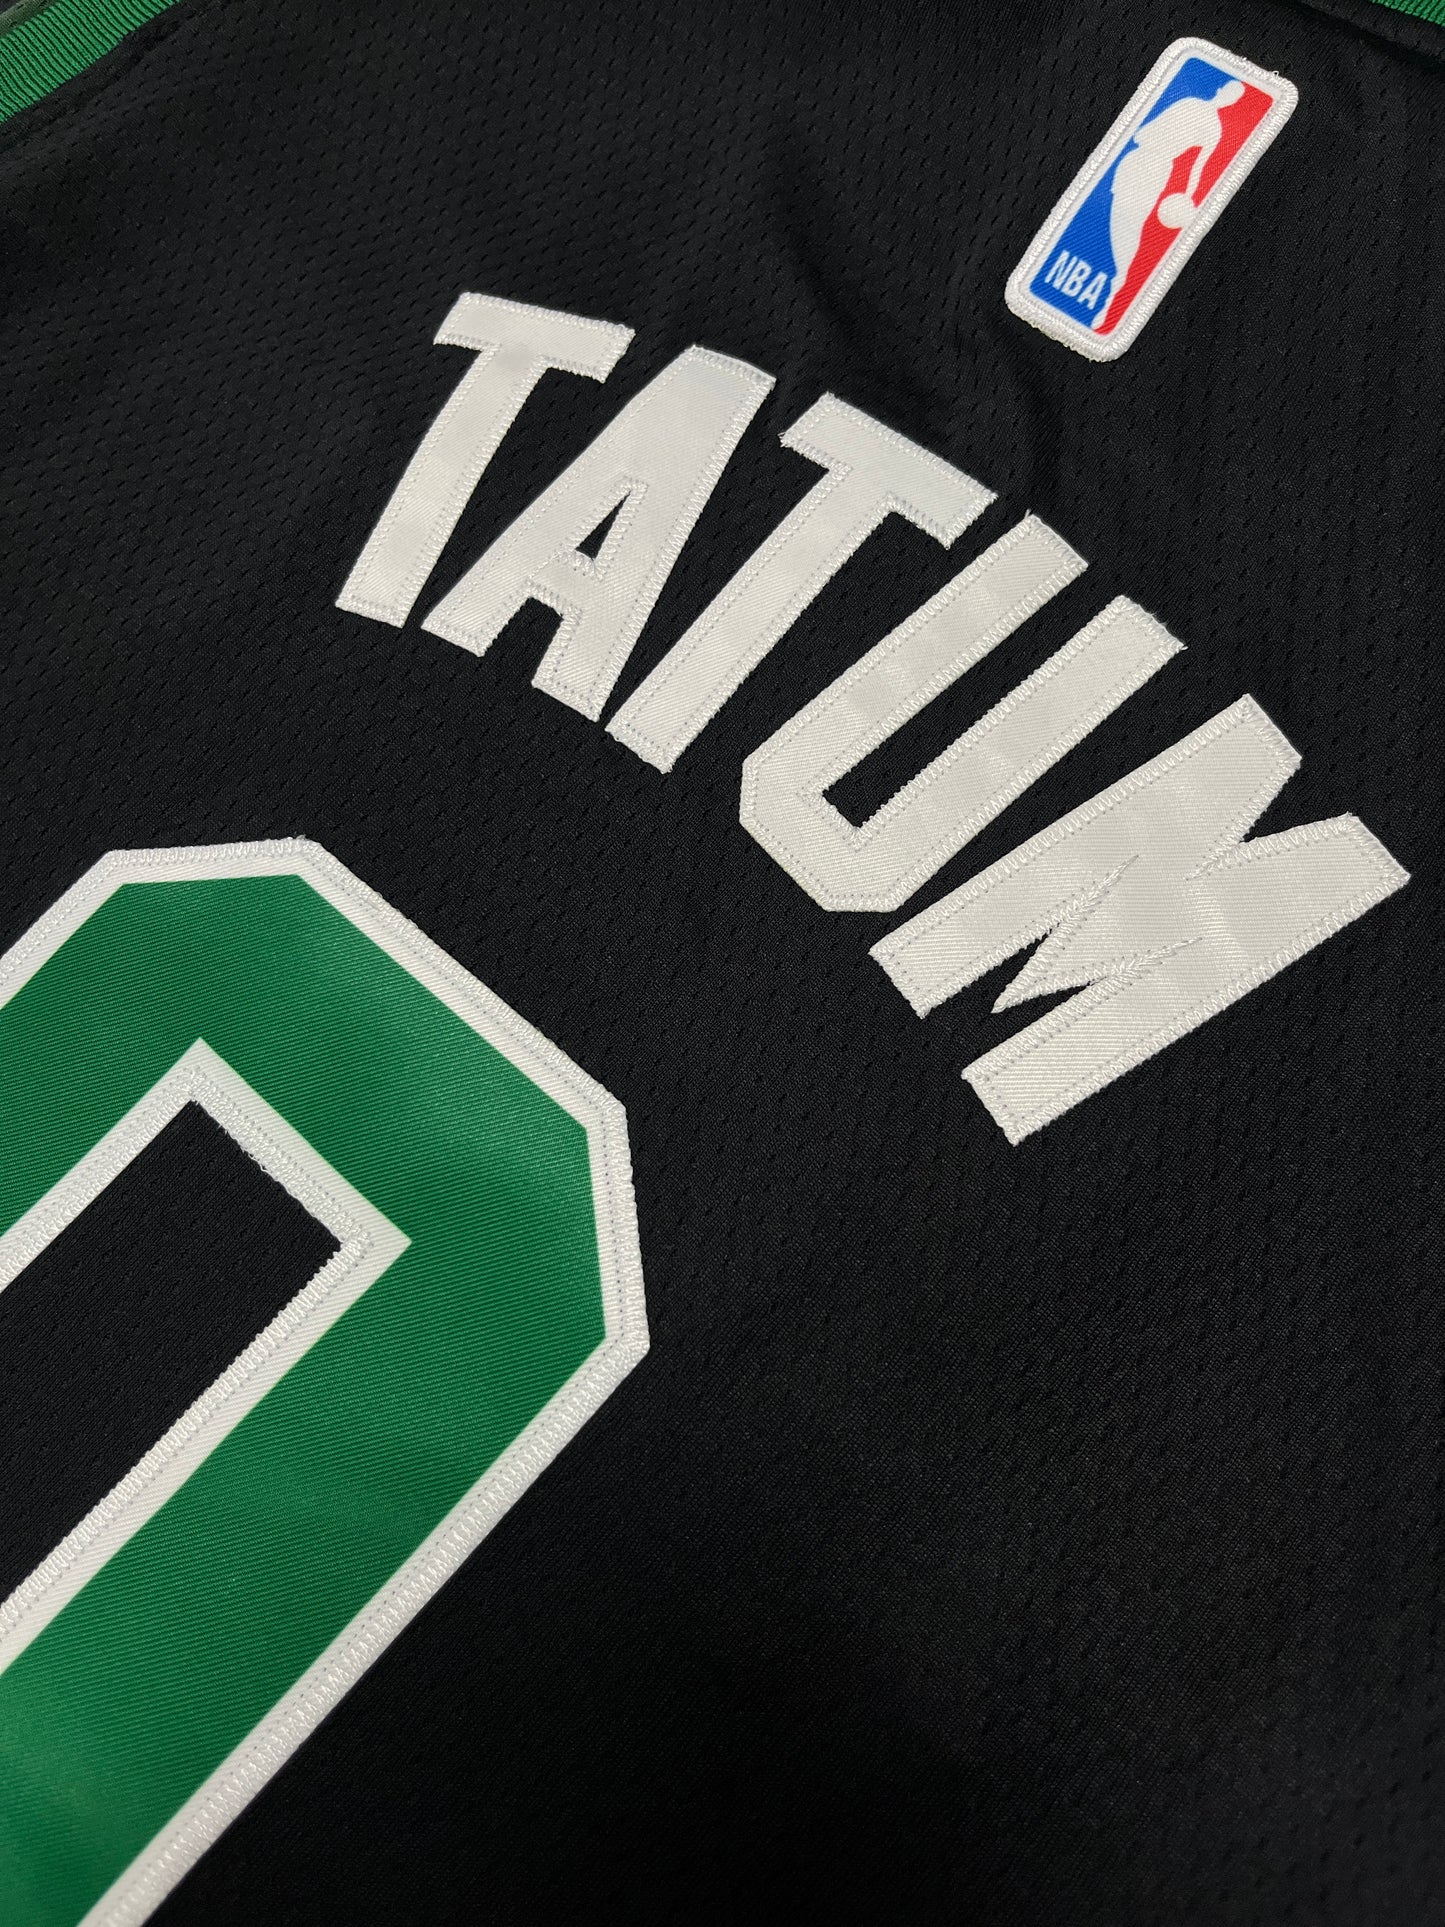 TATUM 0 Black Boston Celtics NBA jersey